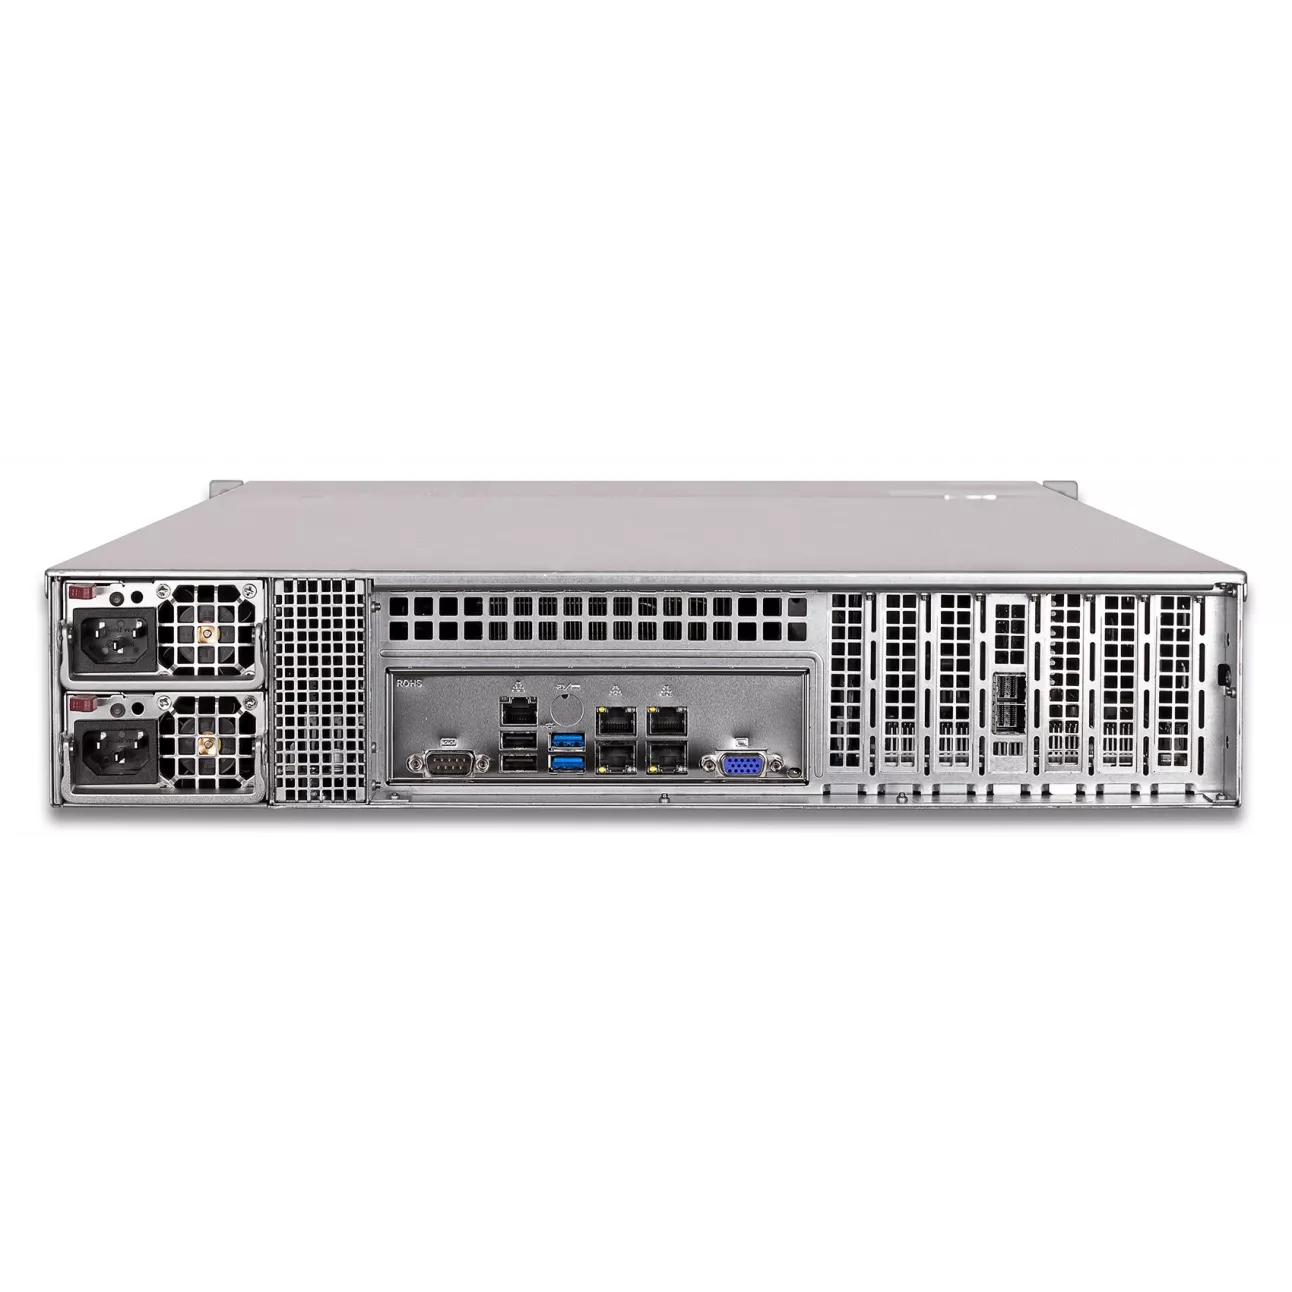 Сервер Supermicro SuperStorage 6028R-E1CR12N, 1 процессор Intel 6C  E5-2609v3 1.90GHz, 16GB DRAM